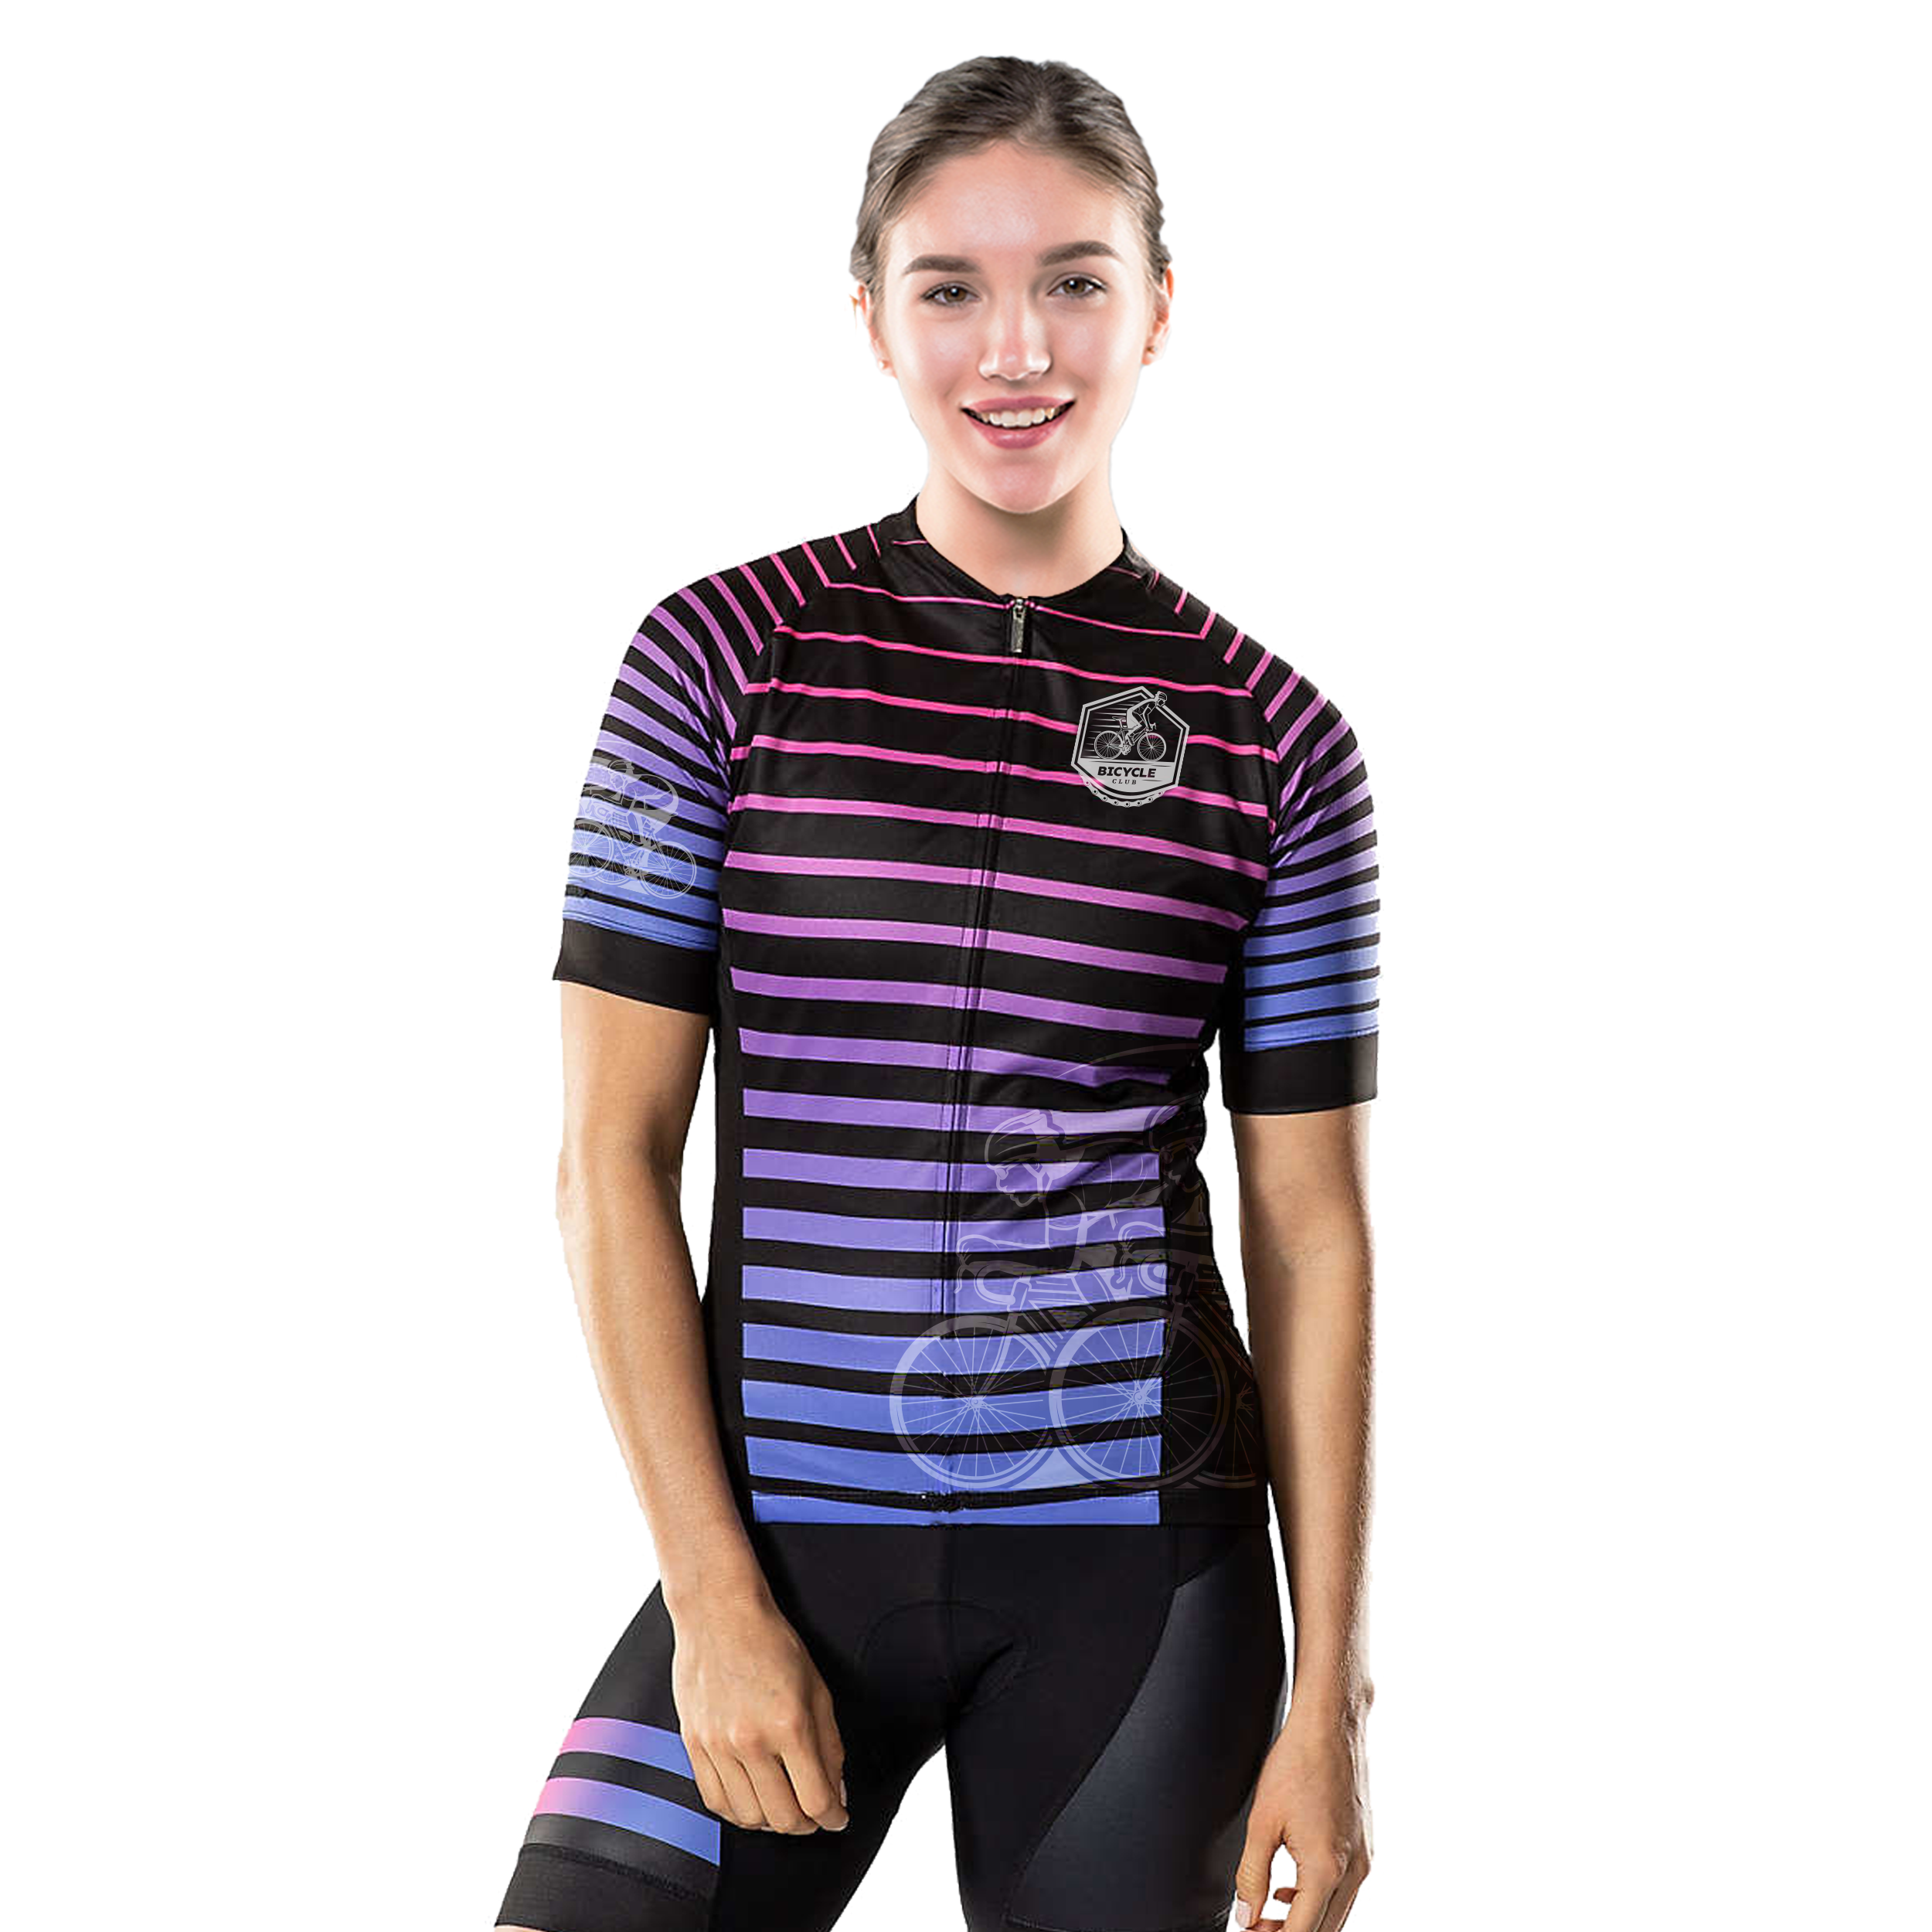 Women’s 3/4 Zip Short Sleeve Cycling Jersey (C/R)